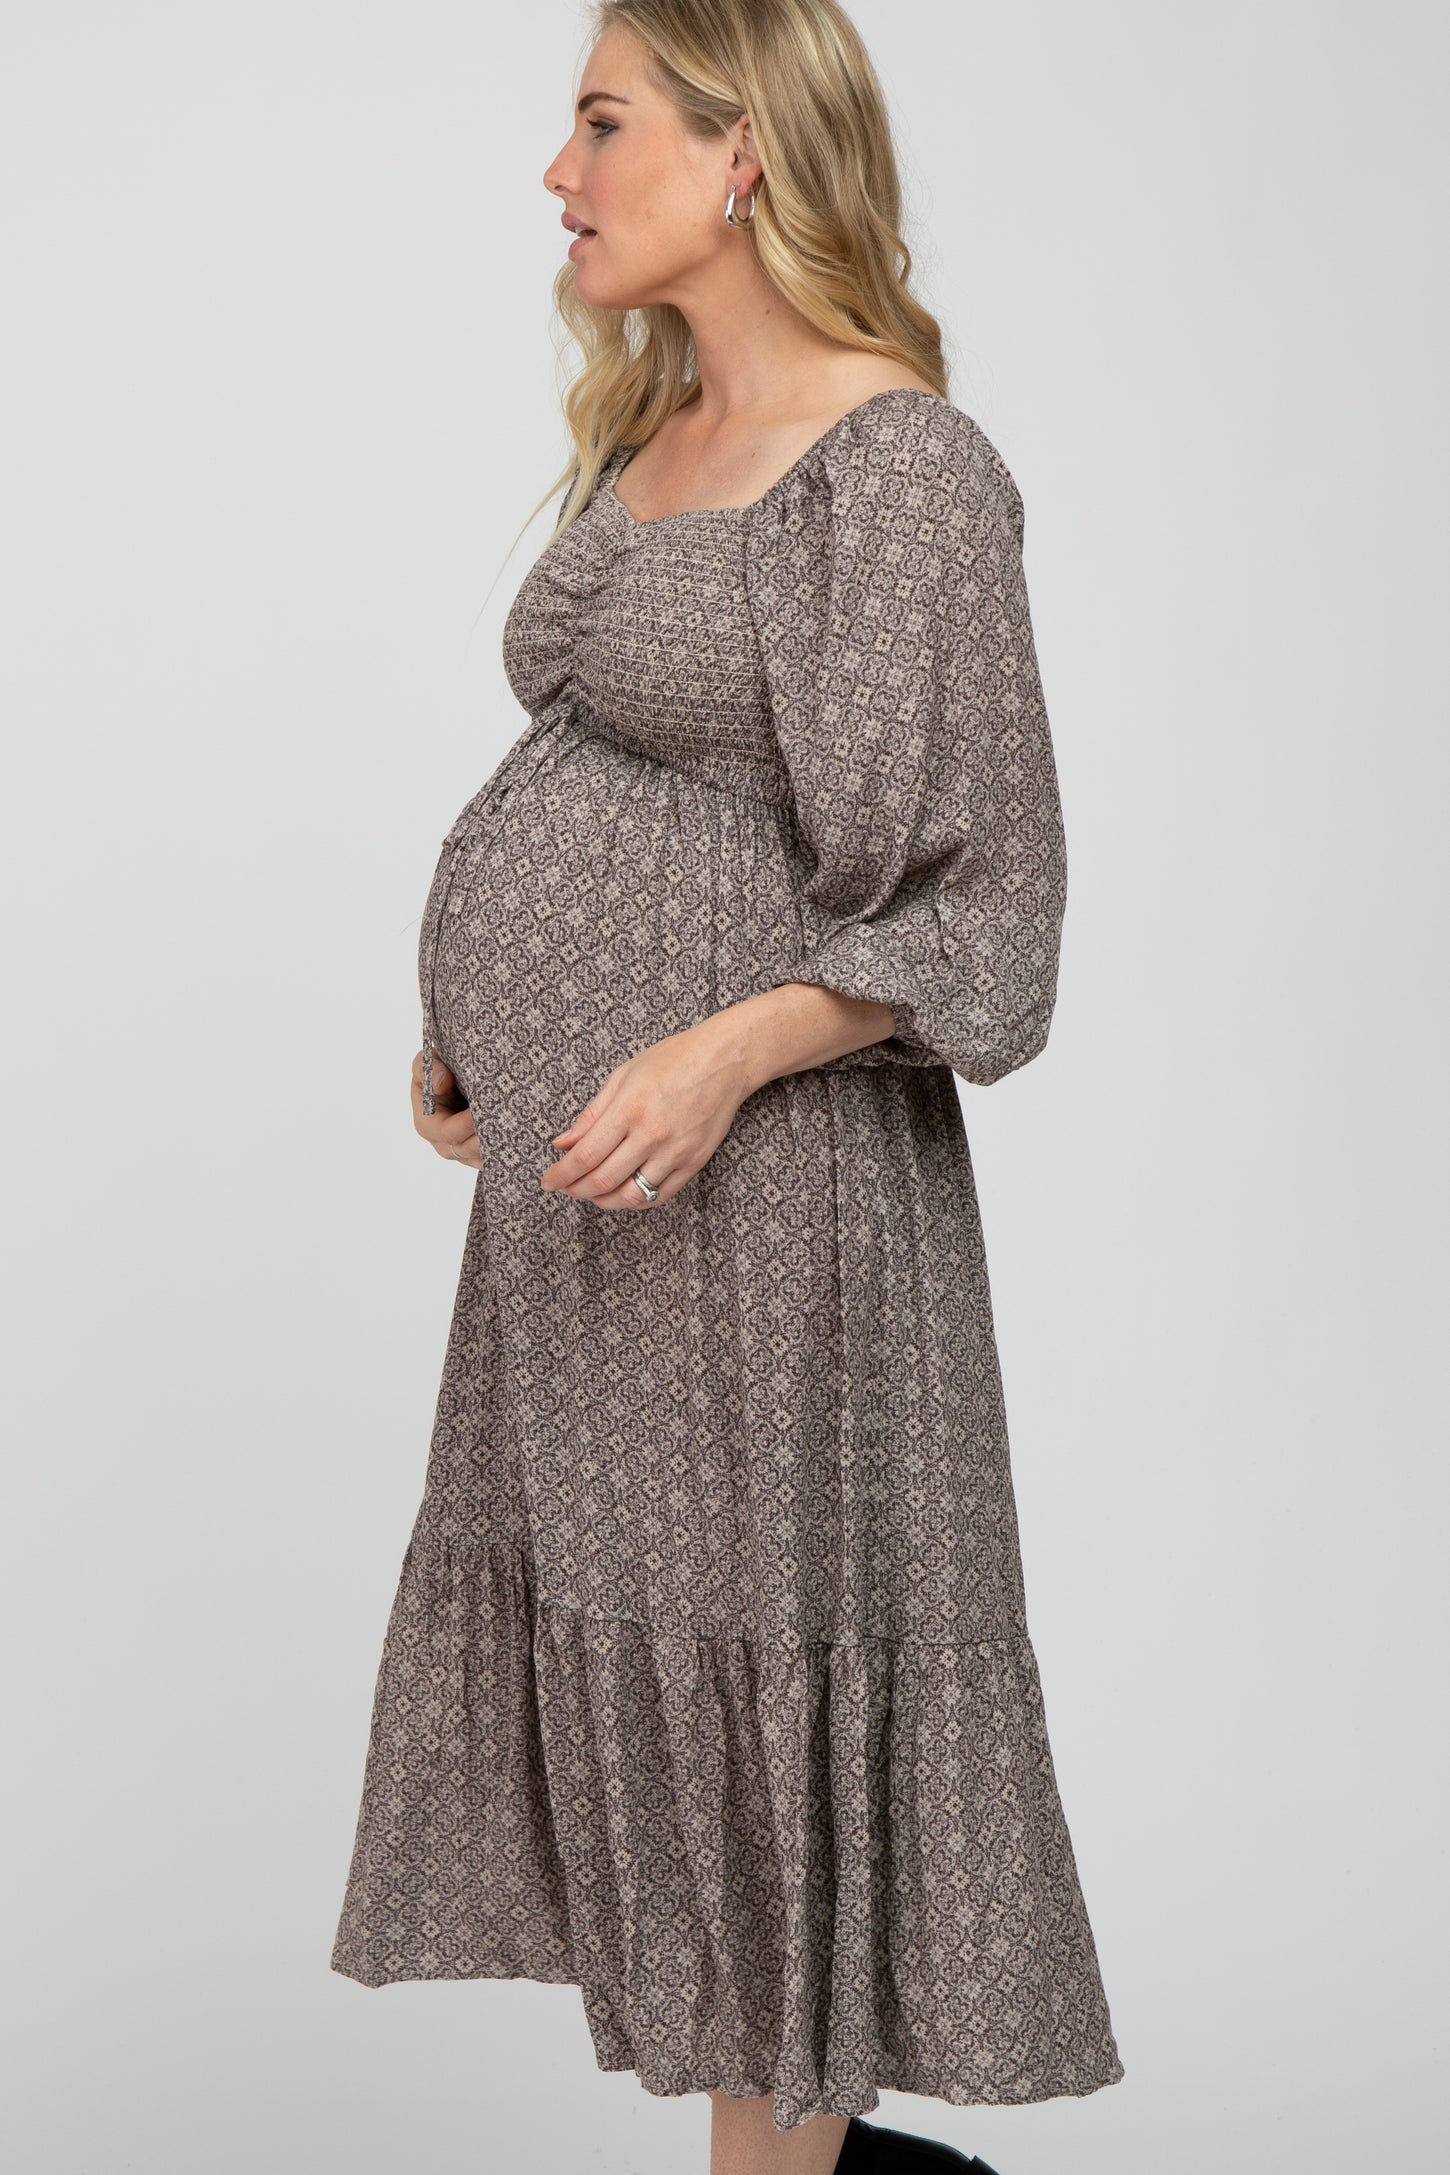 Grey Printed Sweetheart Neck Maternity Dress